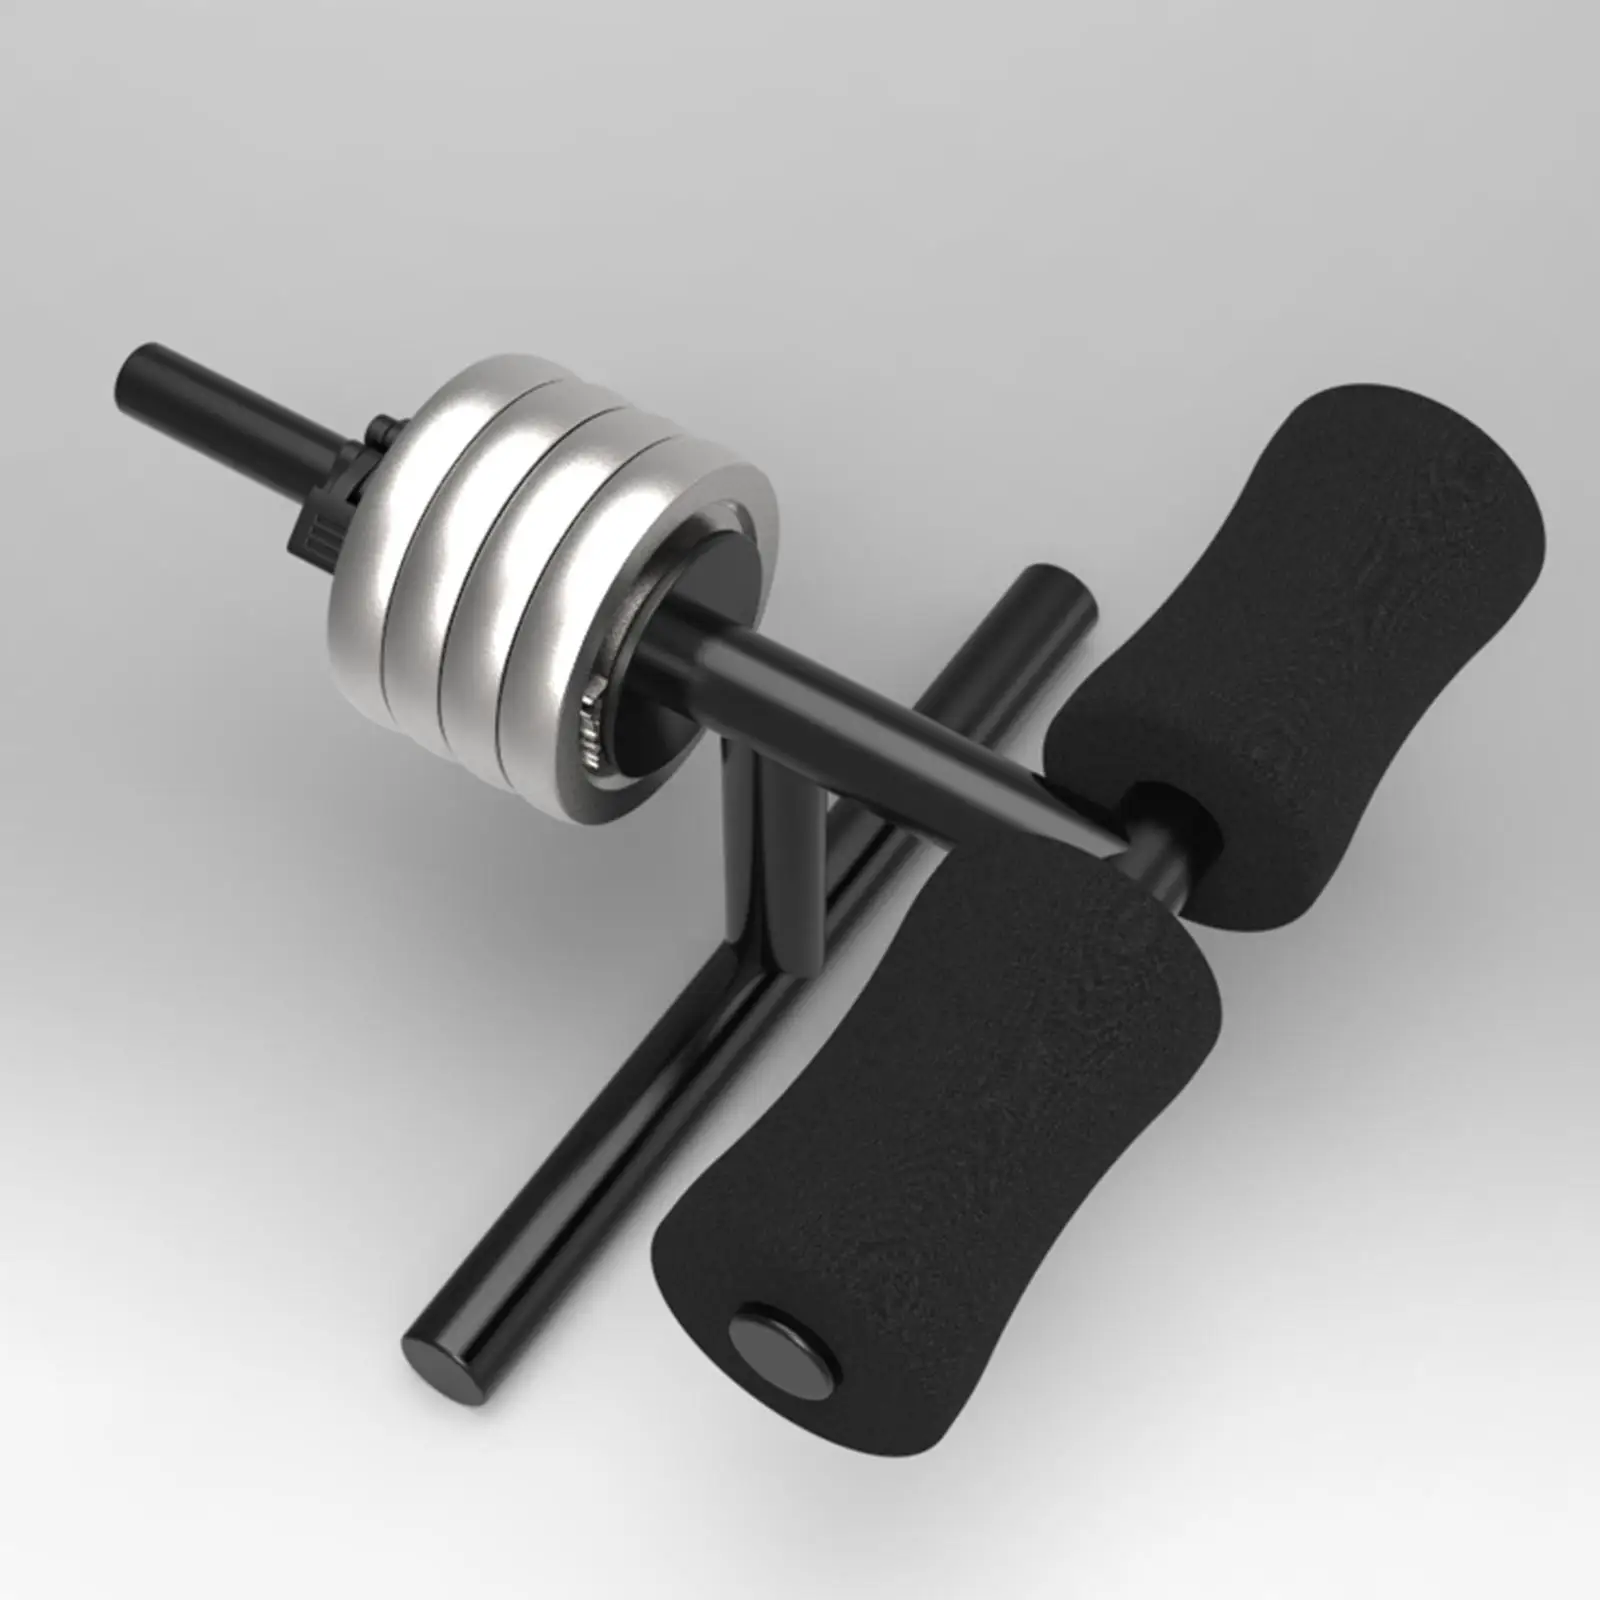 Portable Tibialis Bar Trainer Strength Calf Machine Inner Calf for Strength